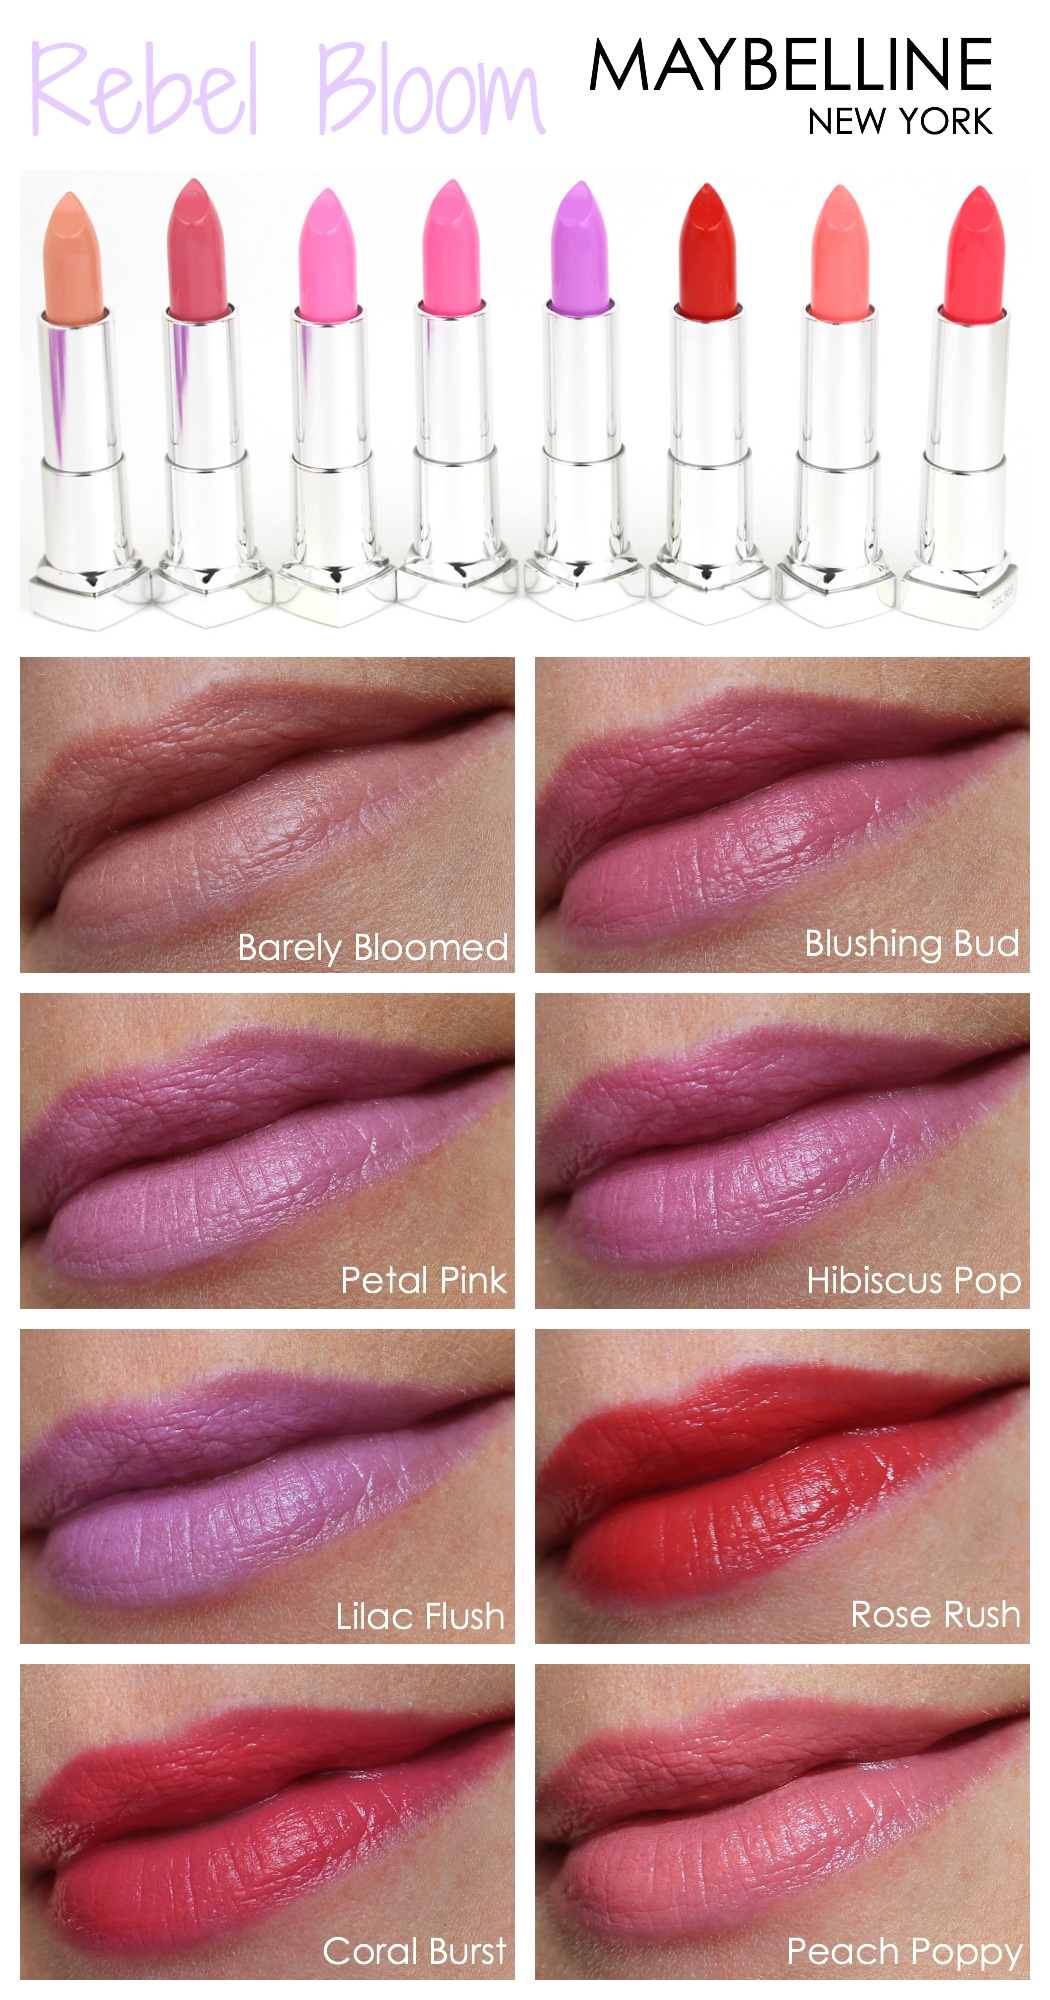 Maybelline ColorSensational Rebel Bloom Lipsticks | Review, Photos ...